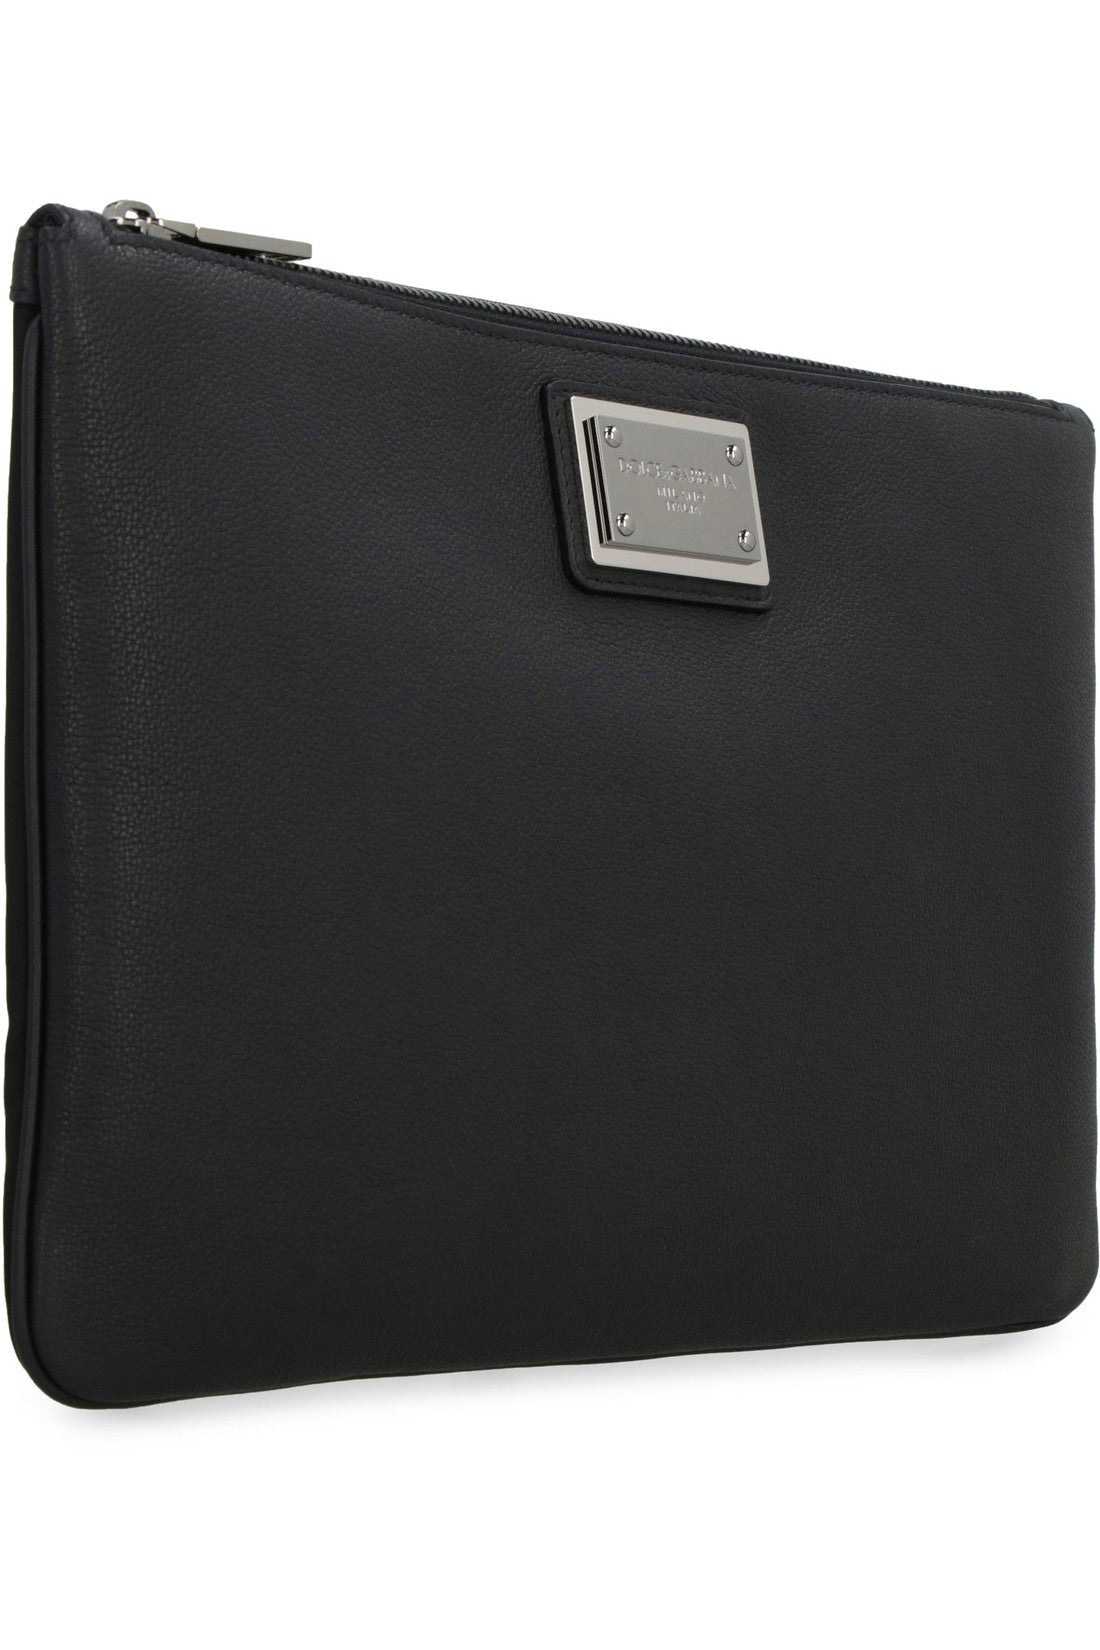 Dolce & Gabbana-OUTLET-SALE-Logo detail flat leather pouch-ARCHIVIST